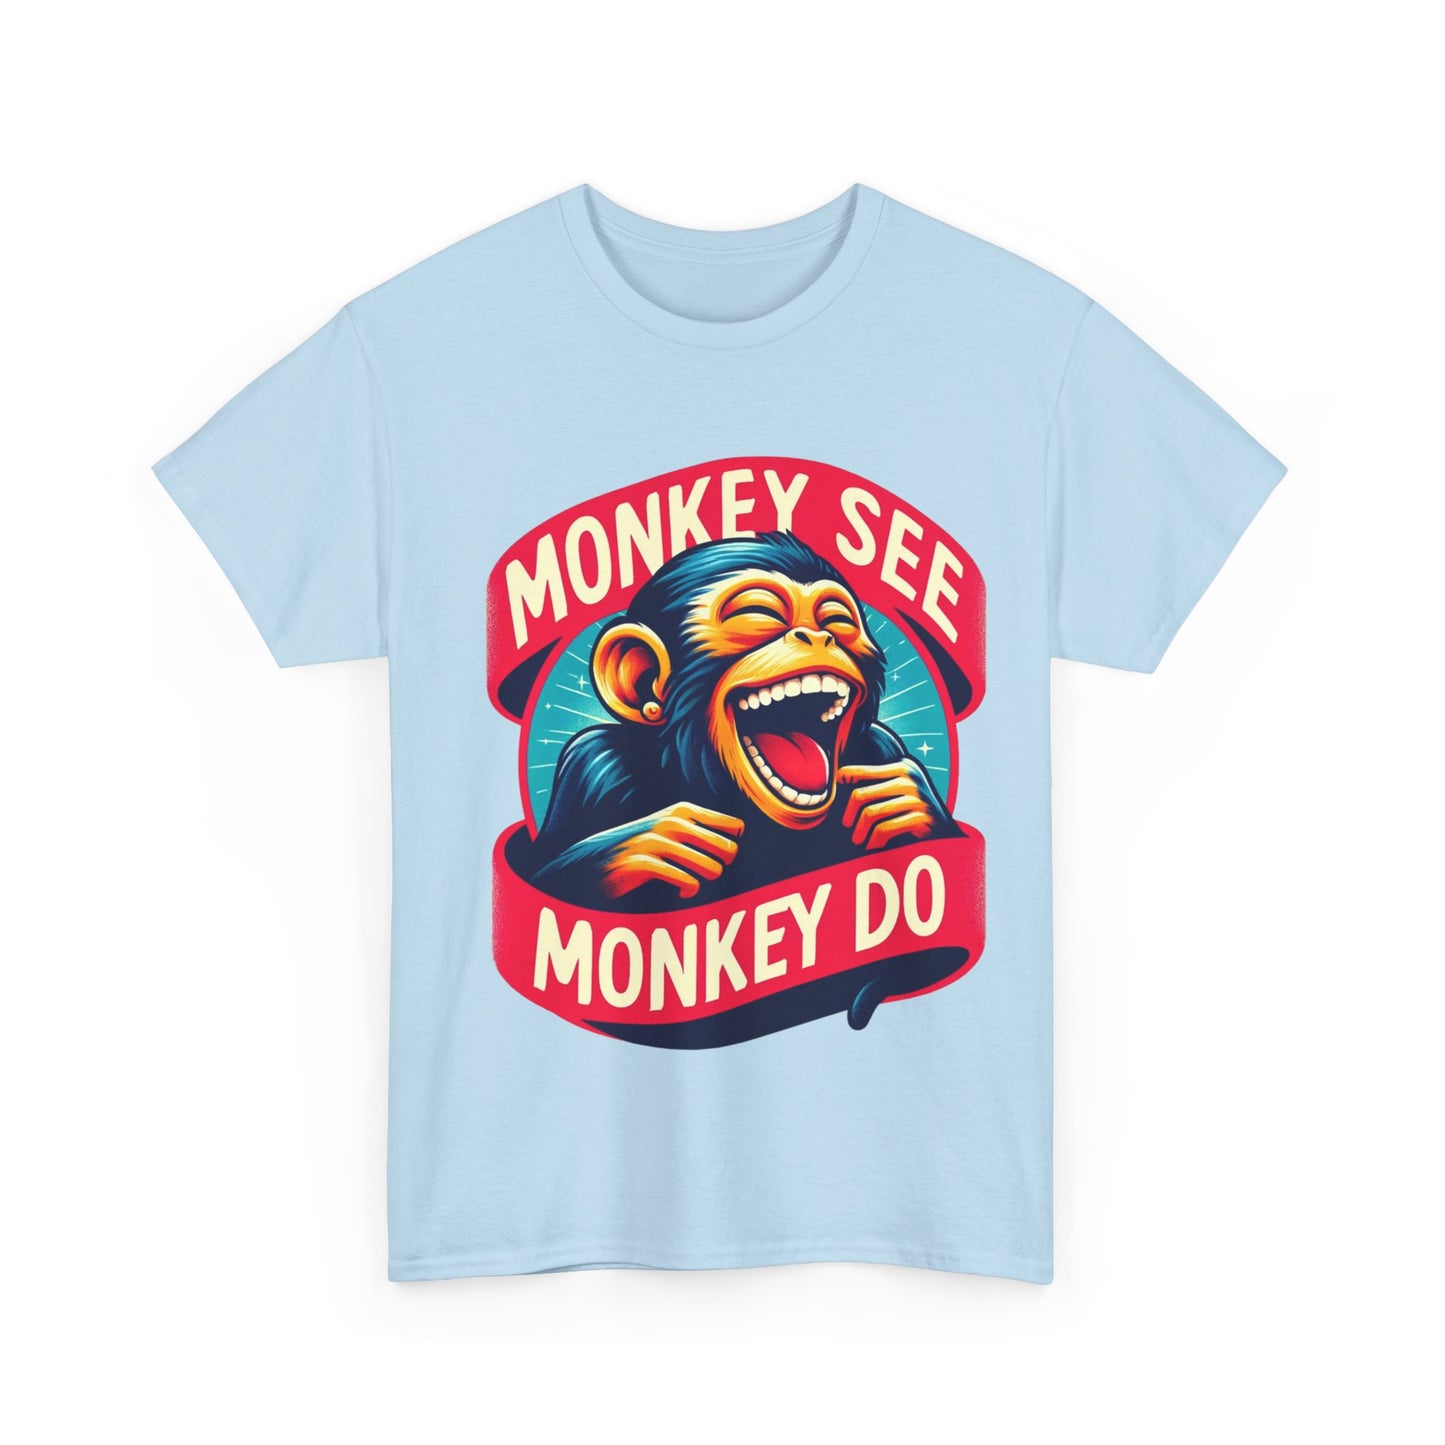 Y.M.L.Y. "Monkey See Monkey Do" T-Shirt Funny T-Shirts Monkey T-Shirts Urban Wear Unisex Heavy Cotton Tee